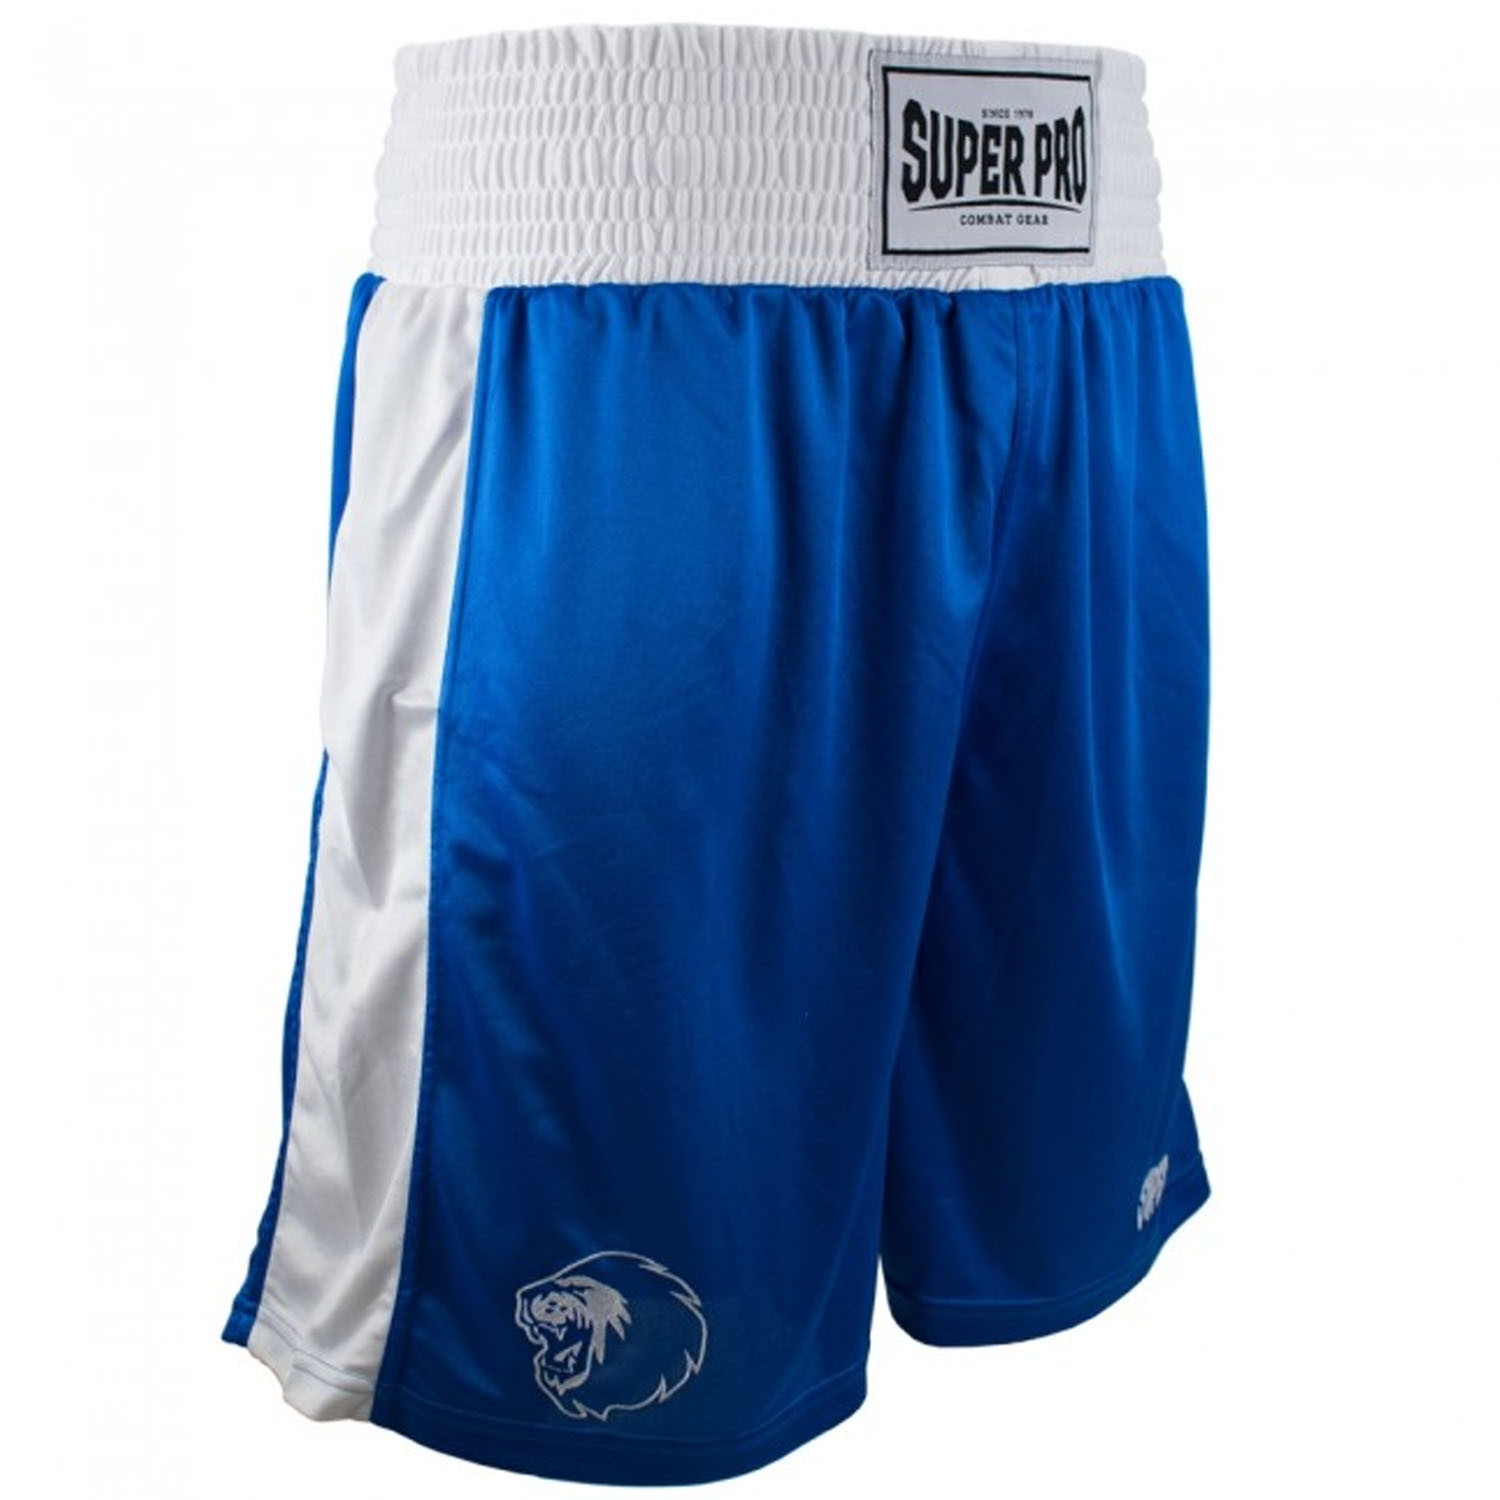 Super Pro Boxing Pants, Club, blue- white, S